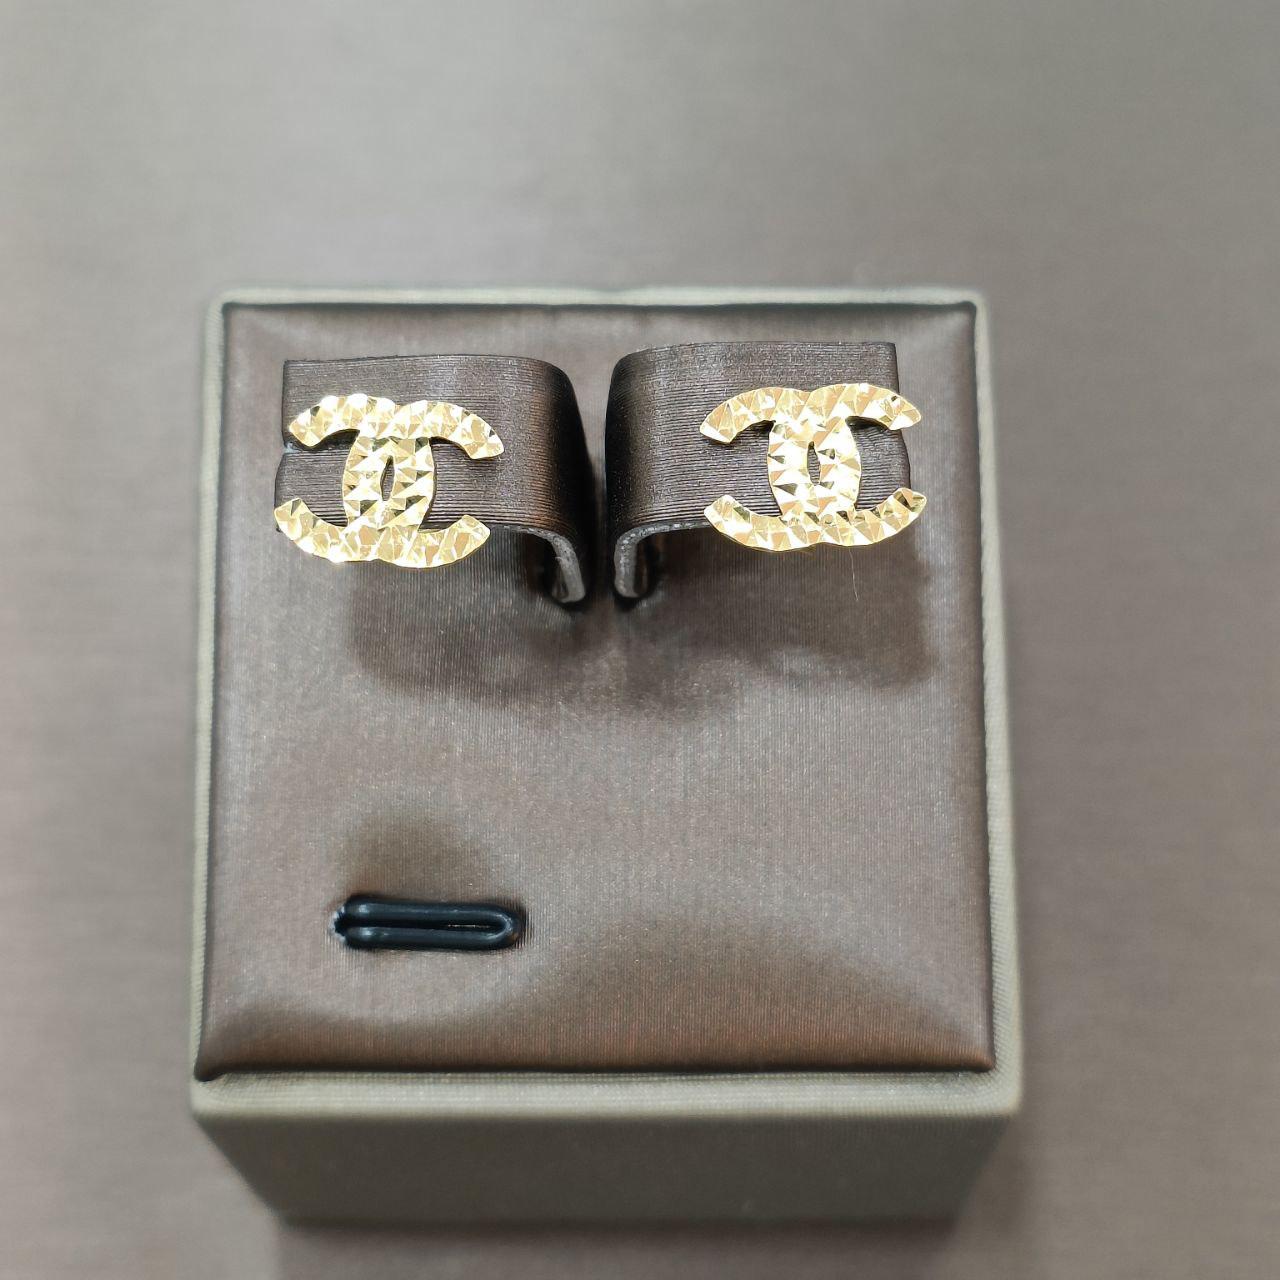 22k / 916 Gold special CC design earring-916 gold-Best Gold Shop